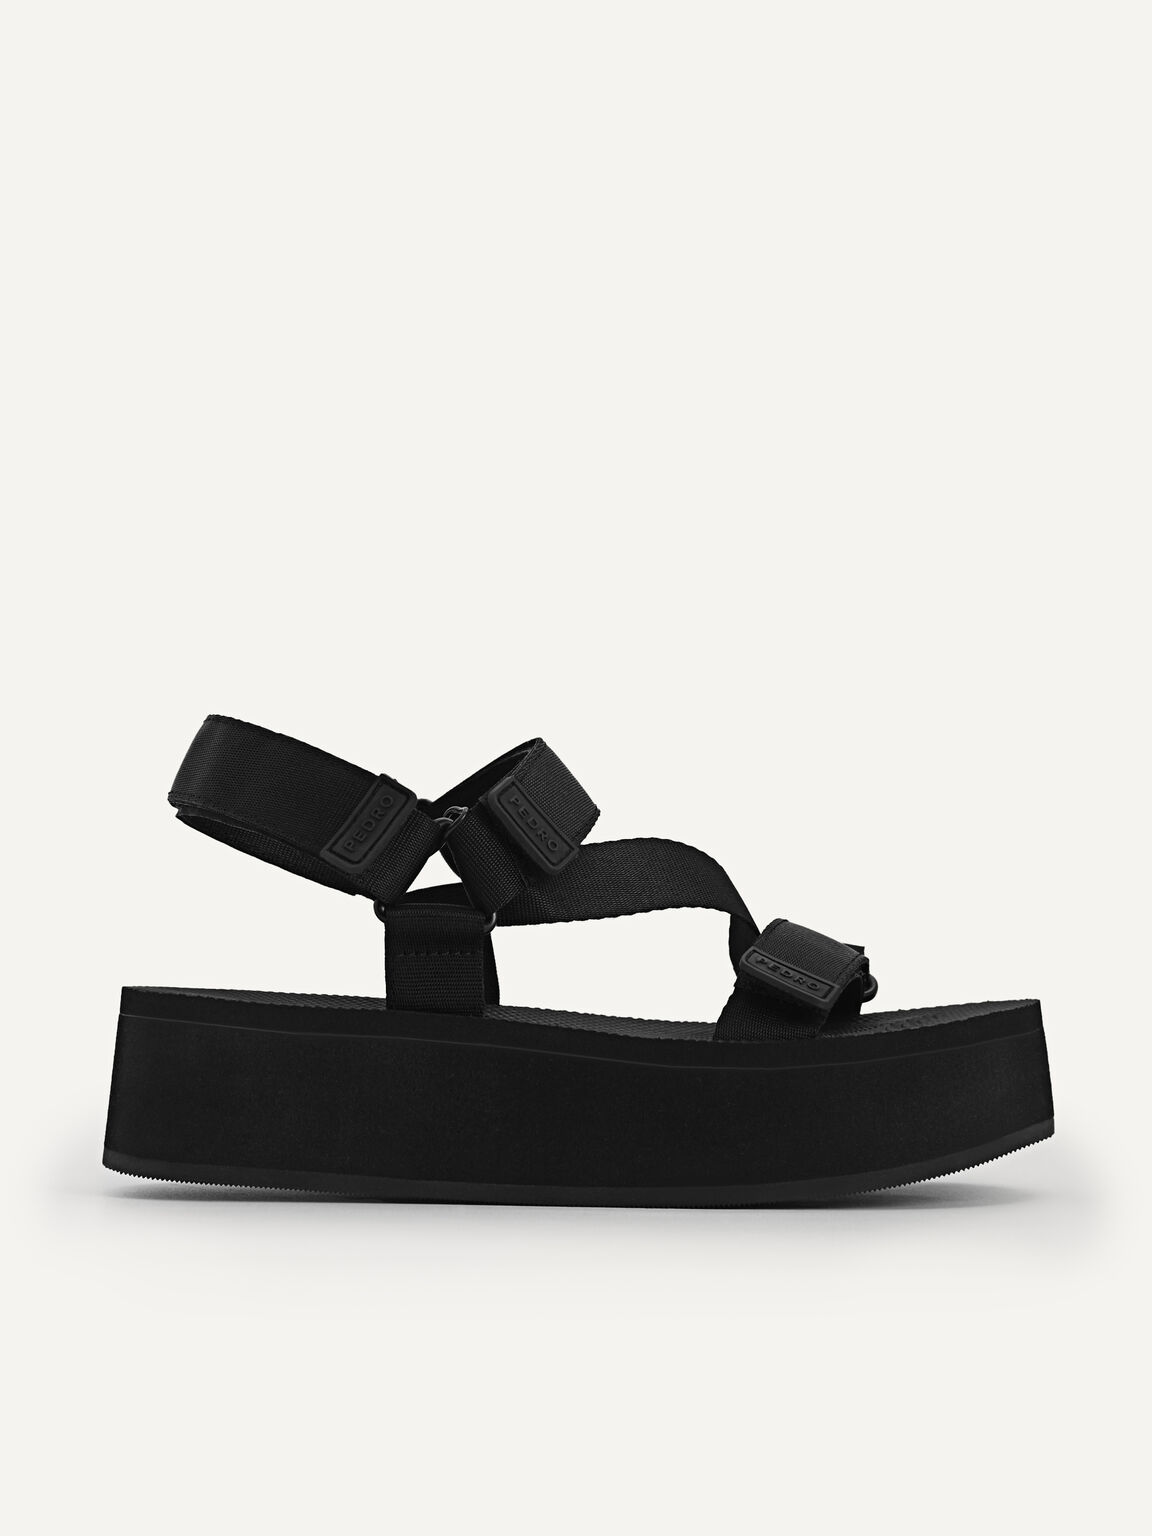 Flatform Sandals, Black, hi-res